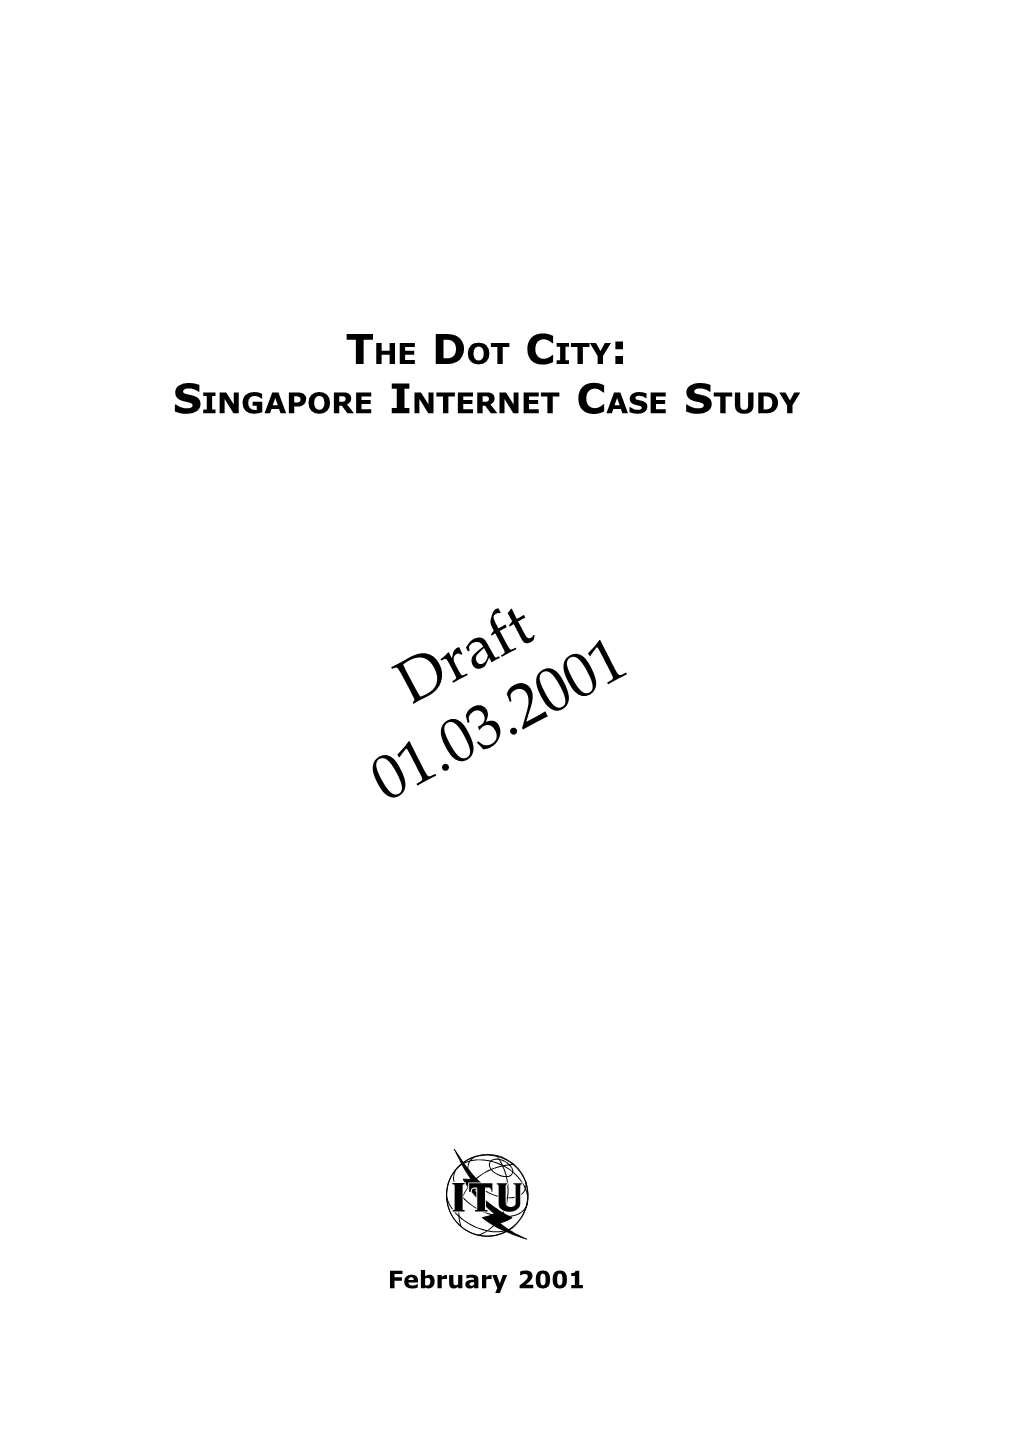 The Dot City: Singapore Internet Case Study